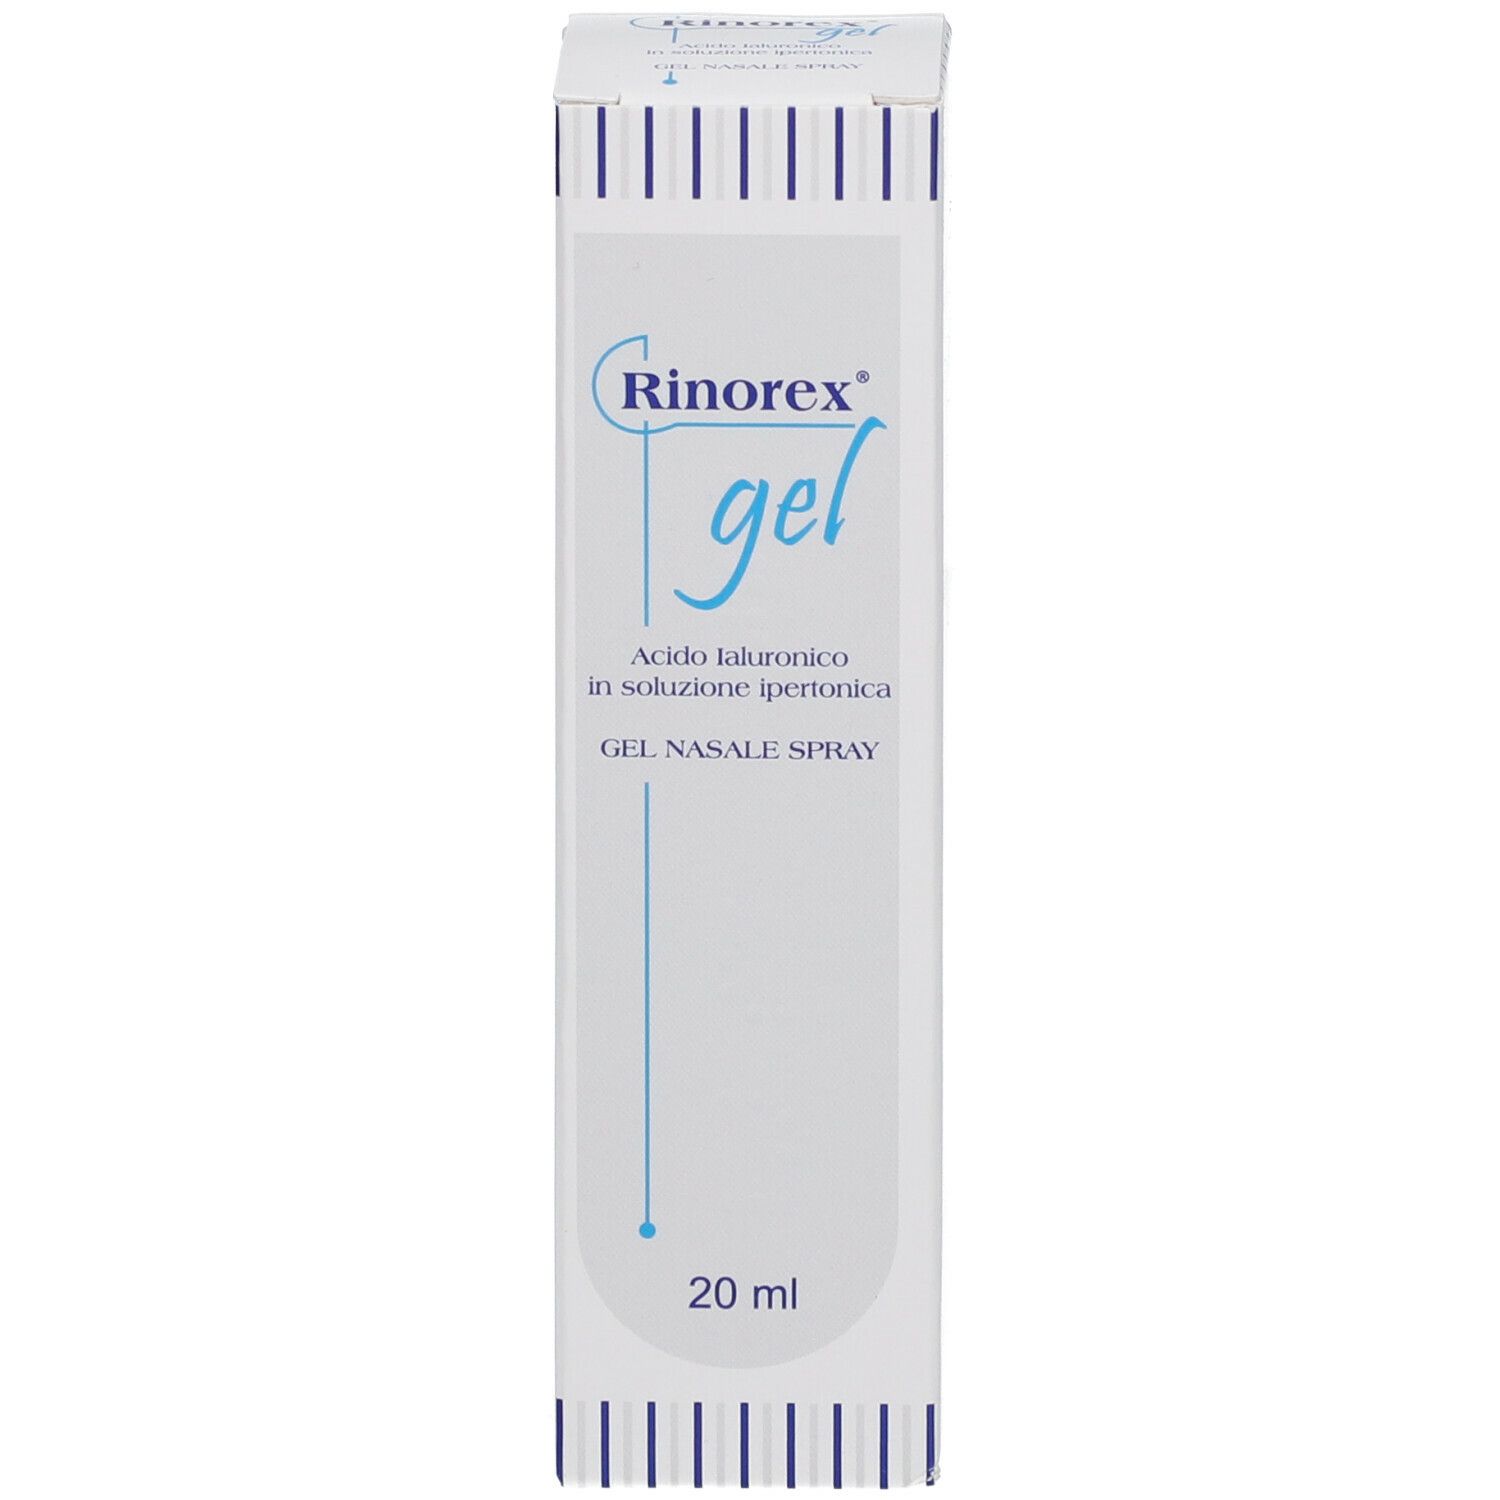 Rinorex® Gel